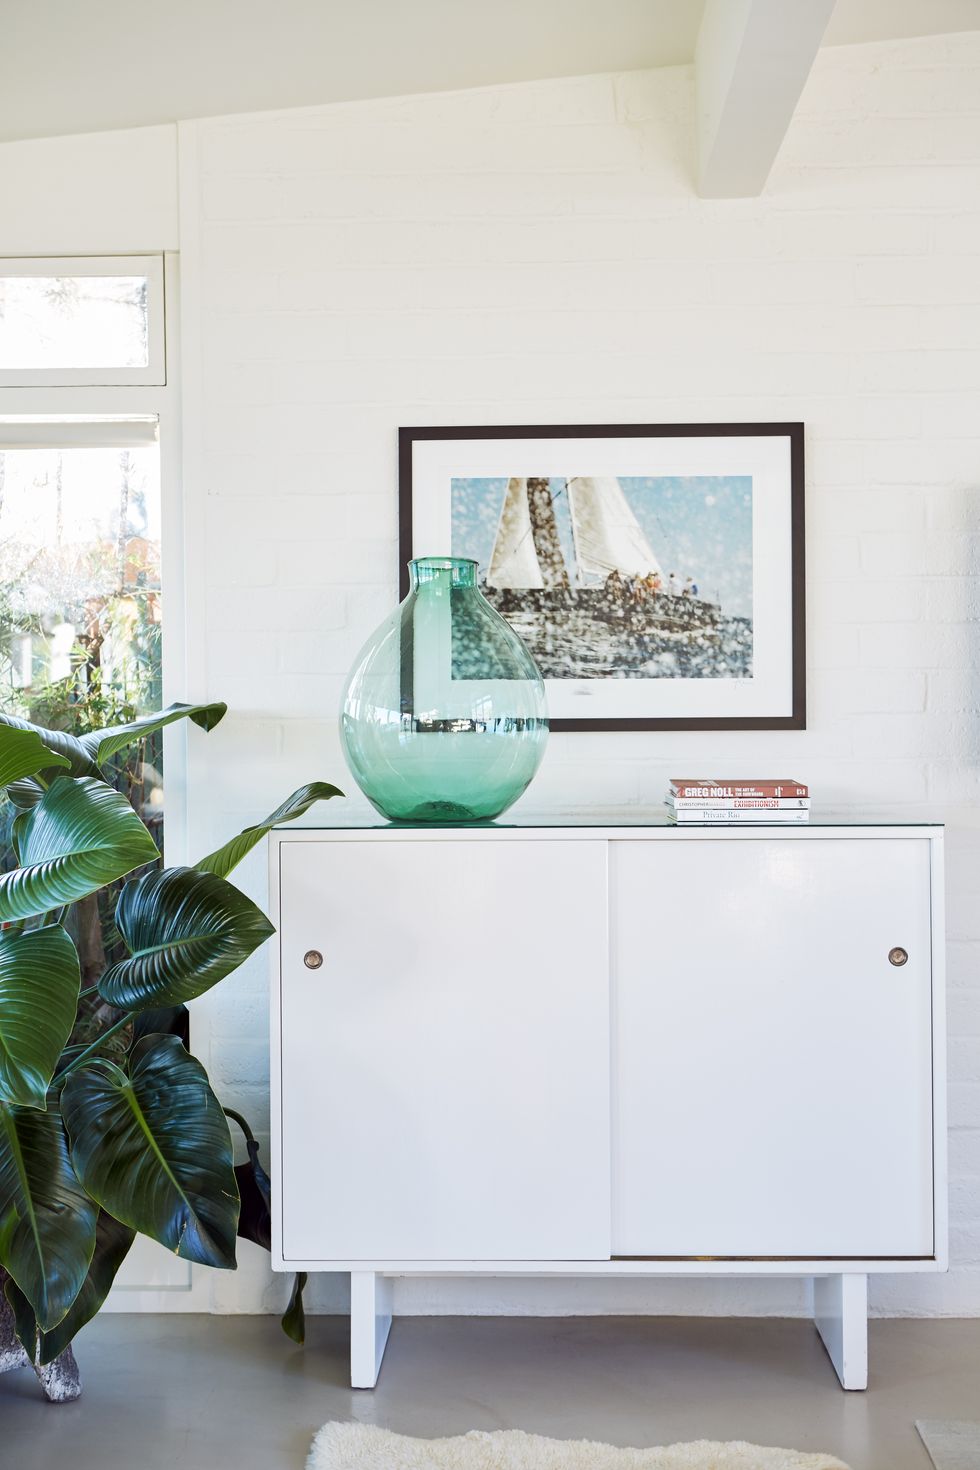 Courteney Cox's Malibu Home - Buy Furniture Online